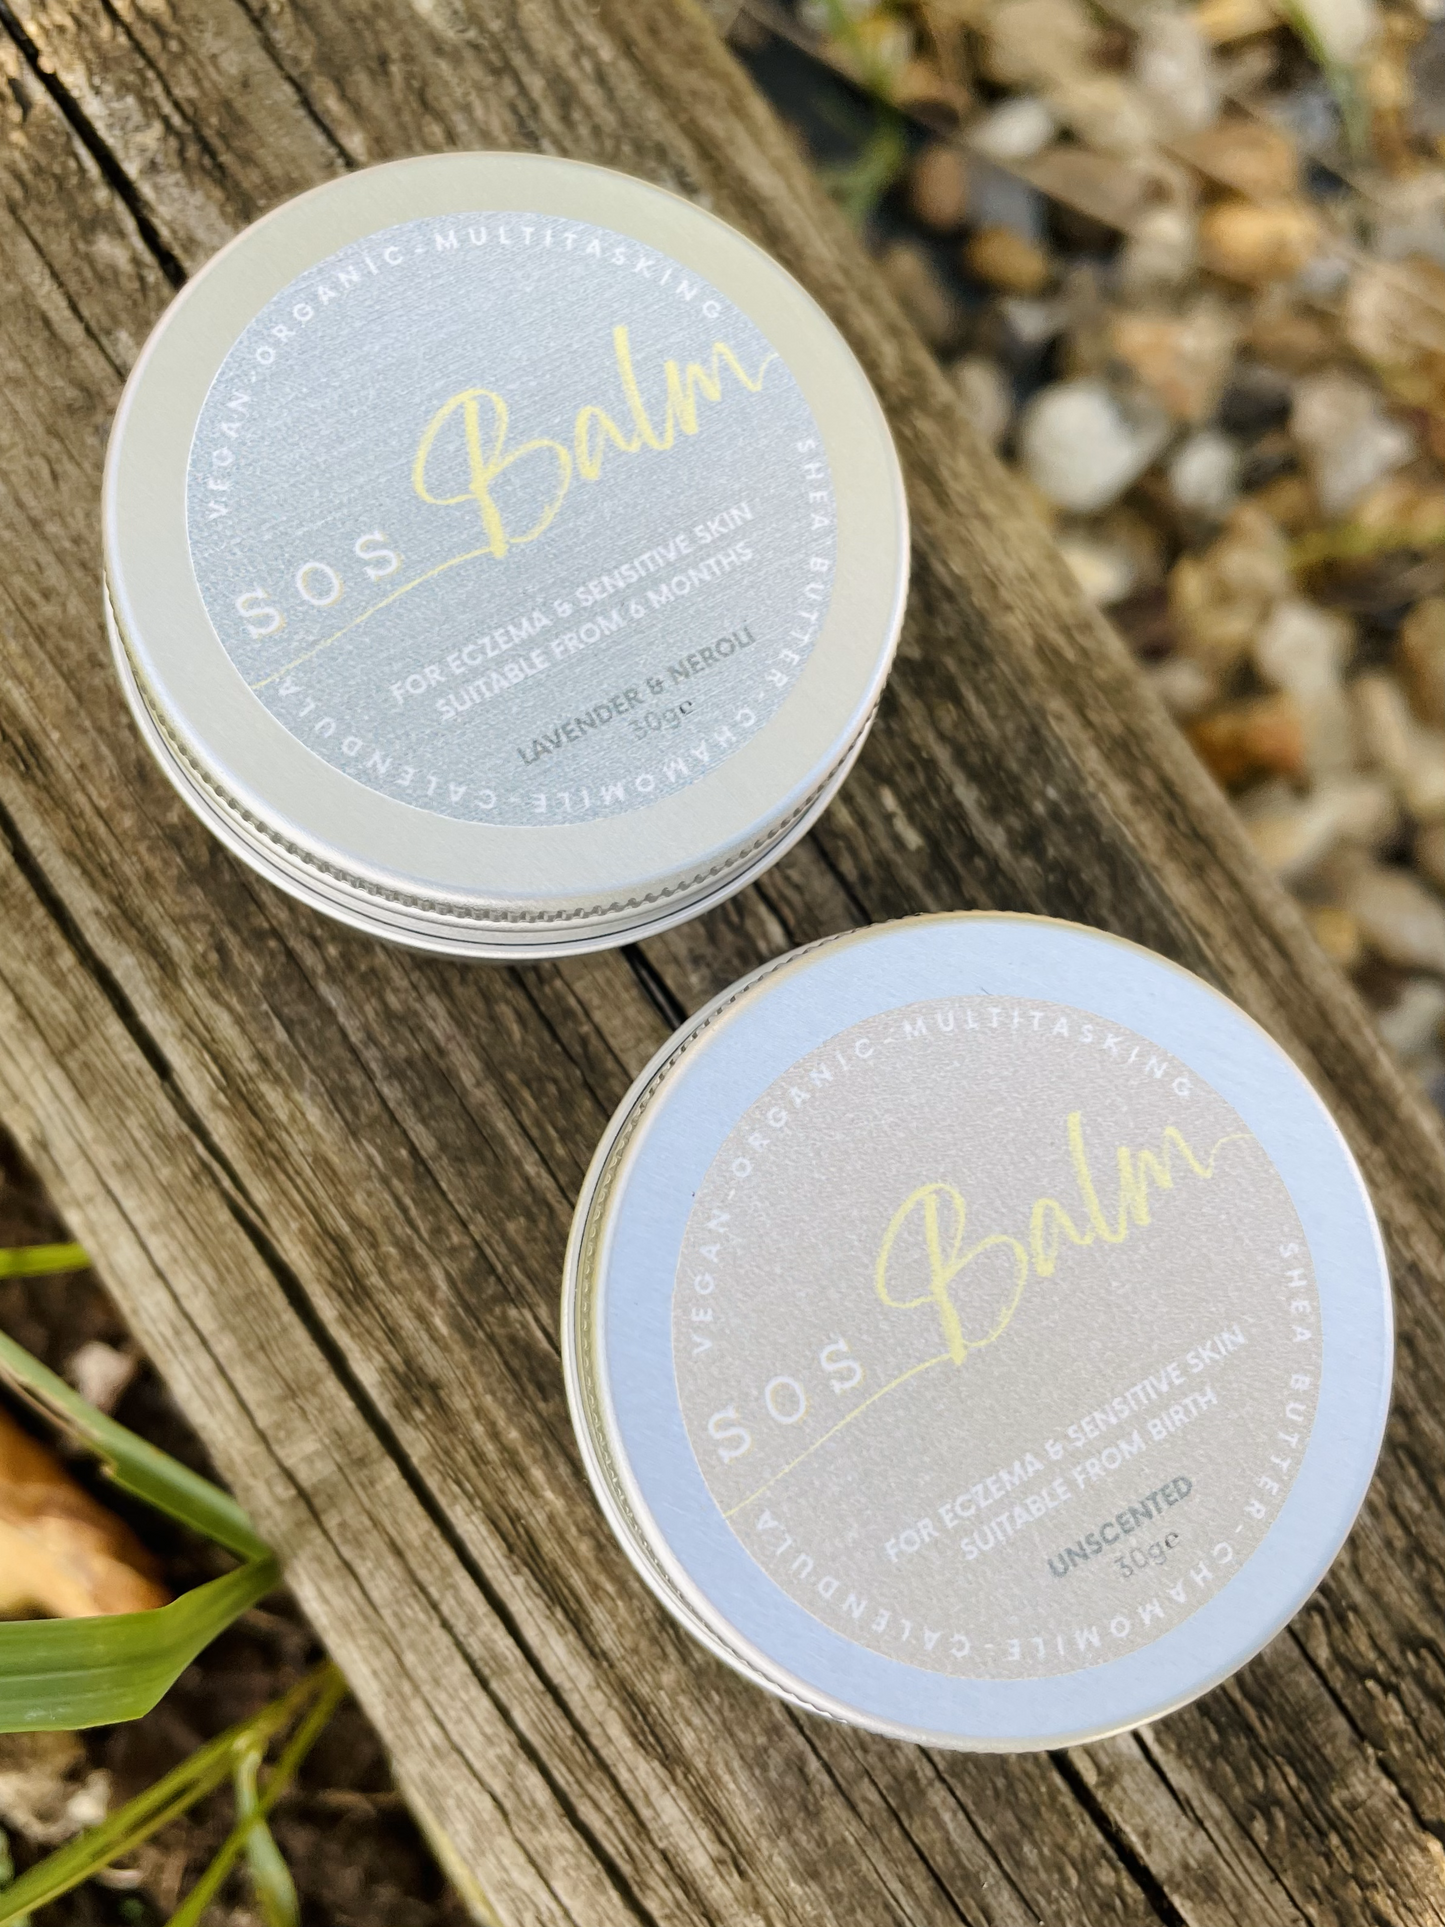 SOS Balm® - Vegan, natural, multitasking Skincare Balm - Eczema friendly - Buy Online